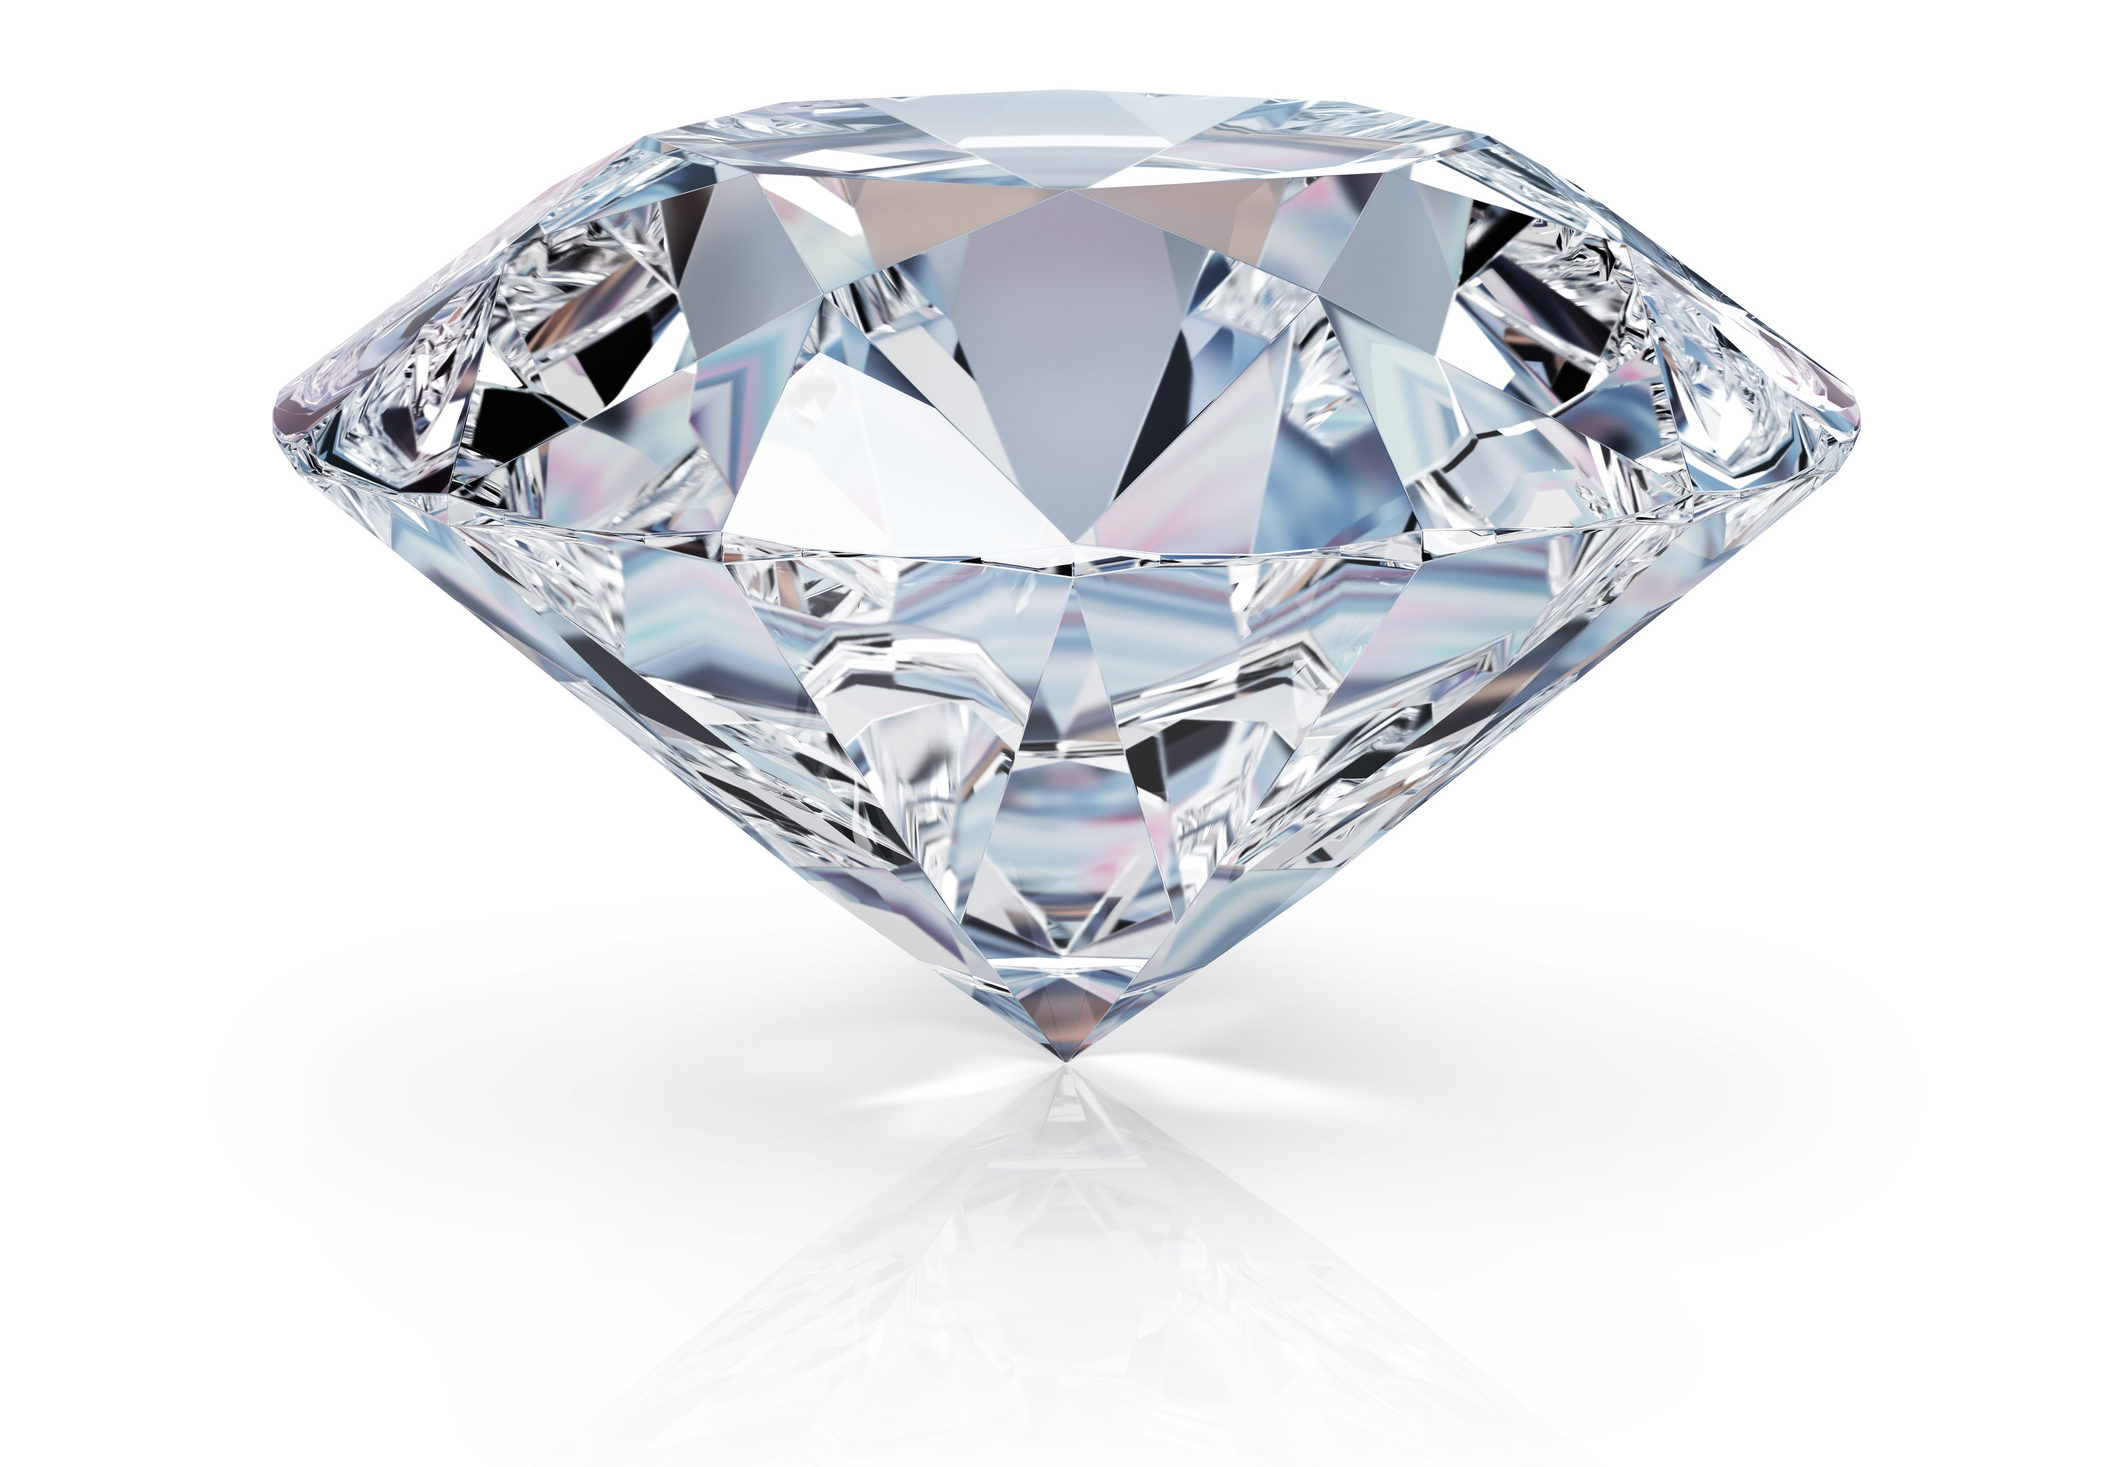 The Four C's of Diamonds – Carat Weight